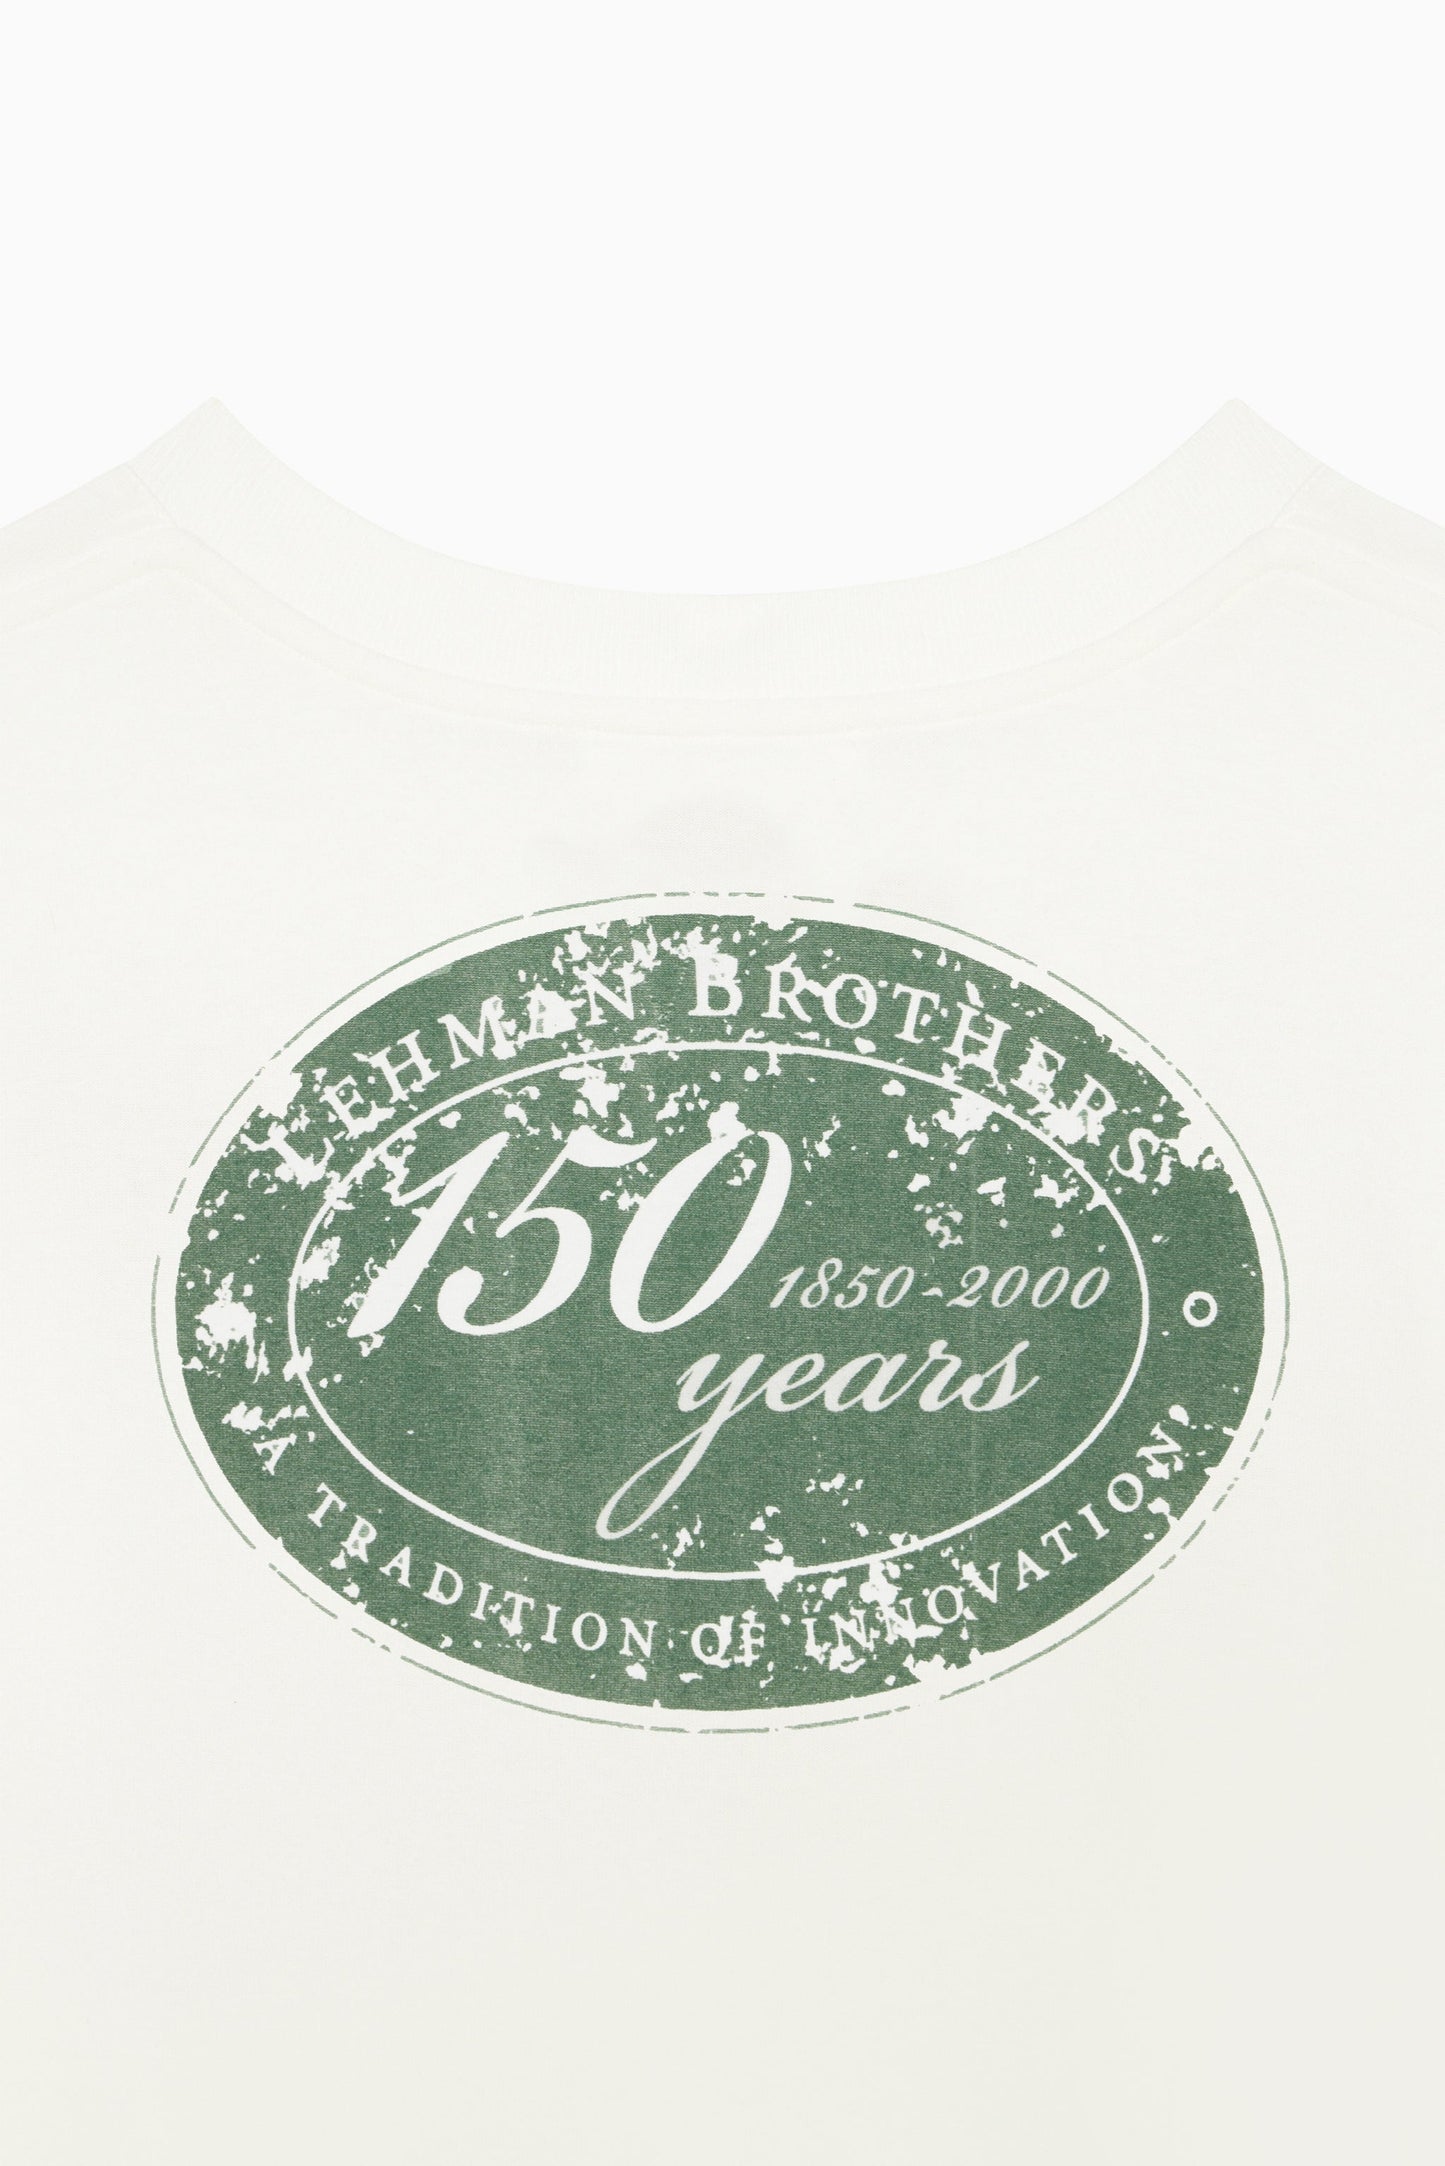 Woman's Lehman Brothers T-Shirt